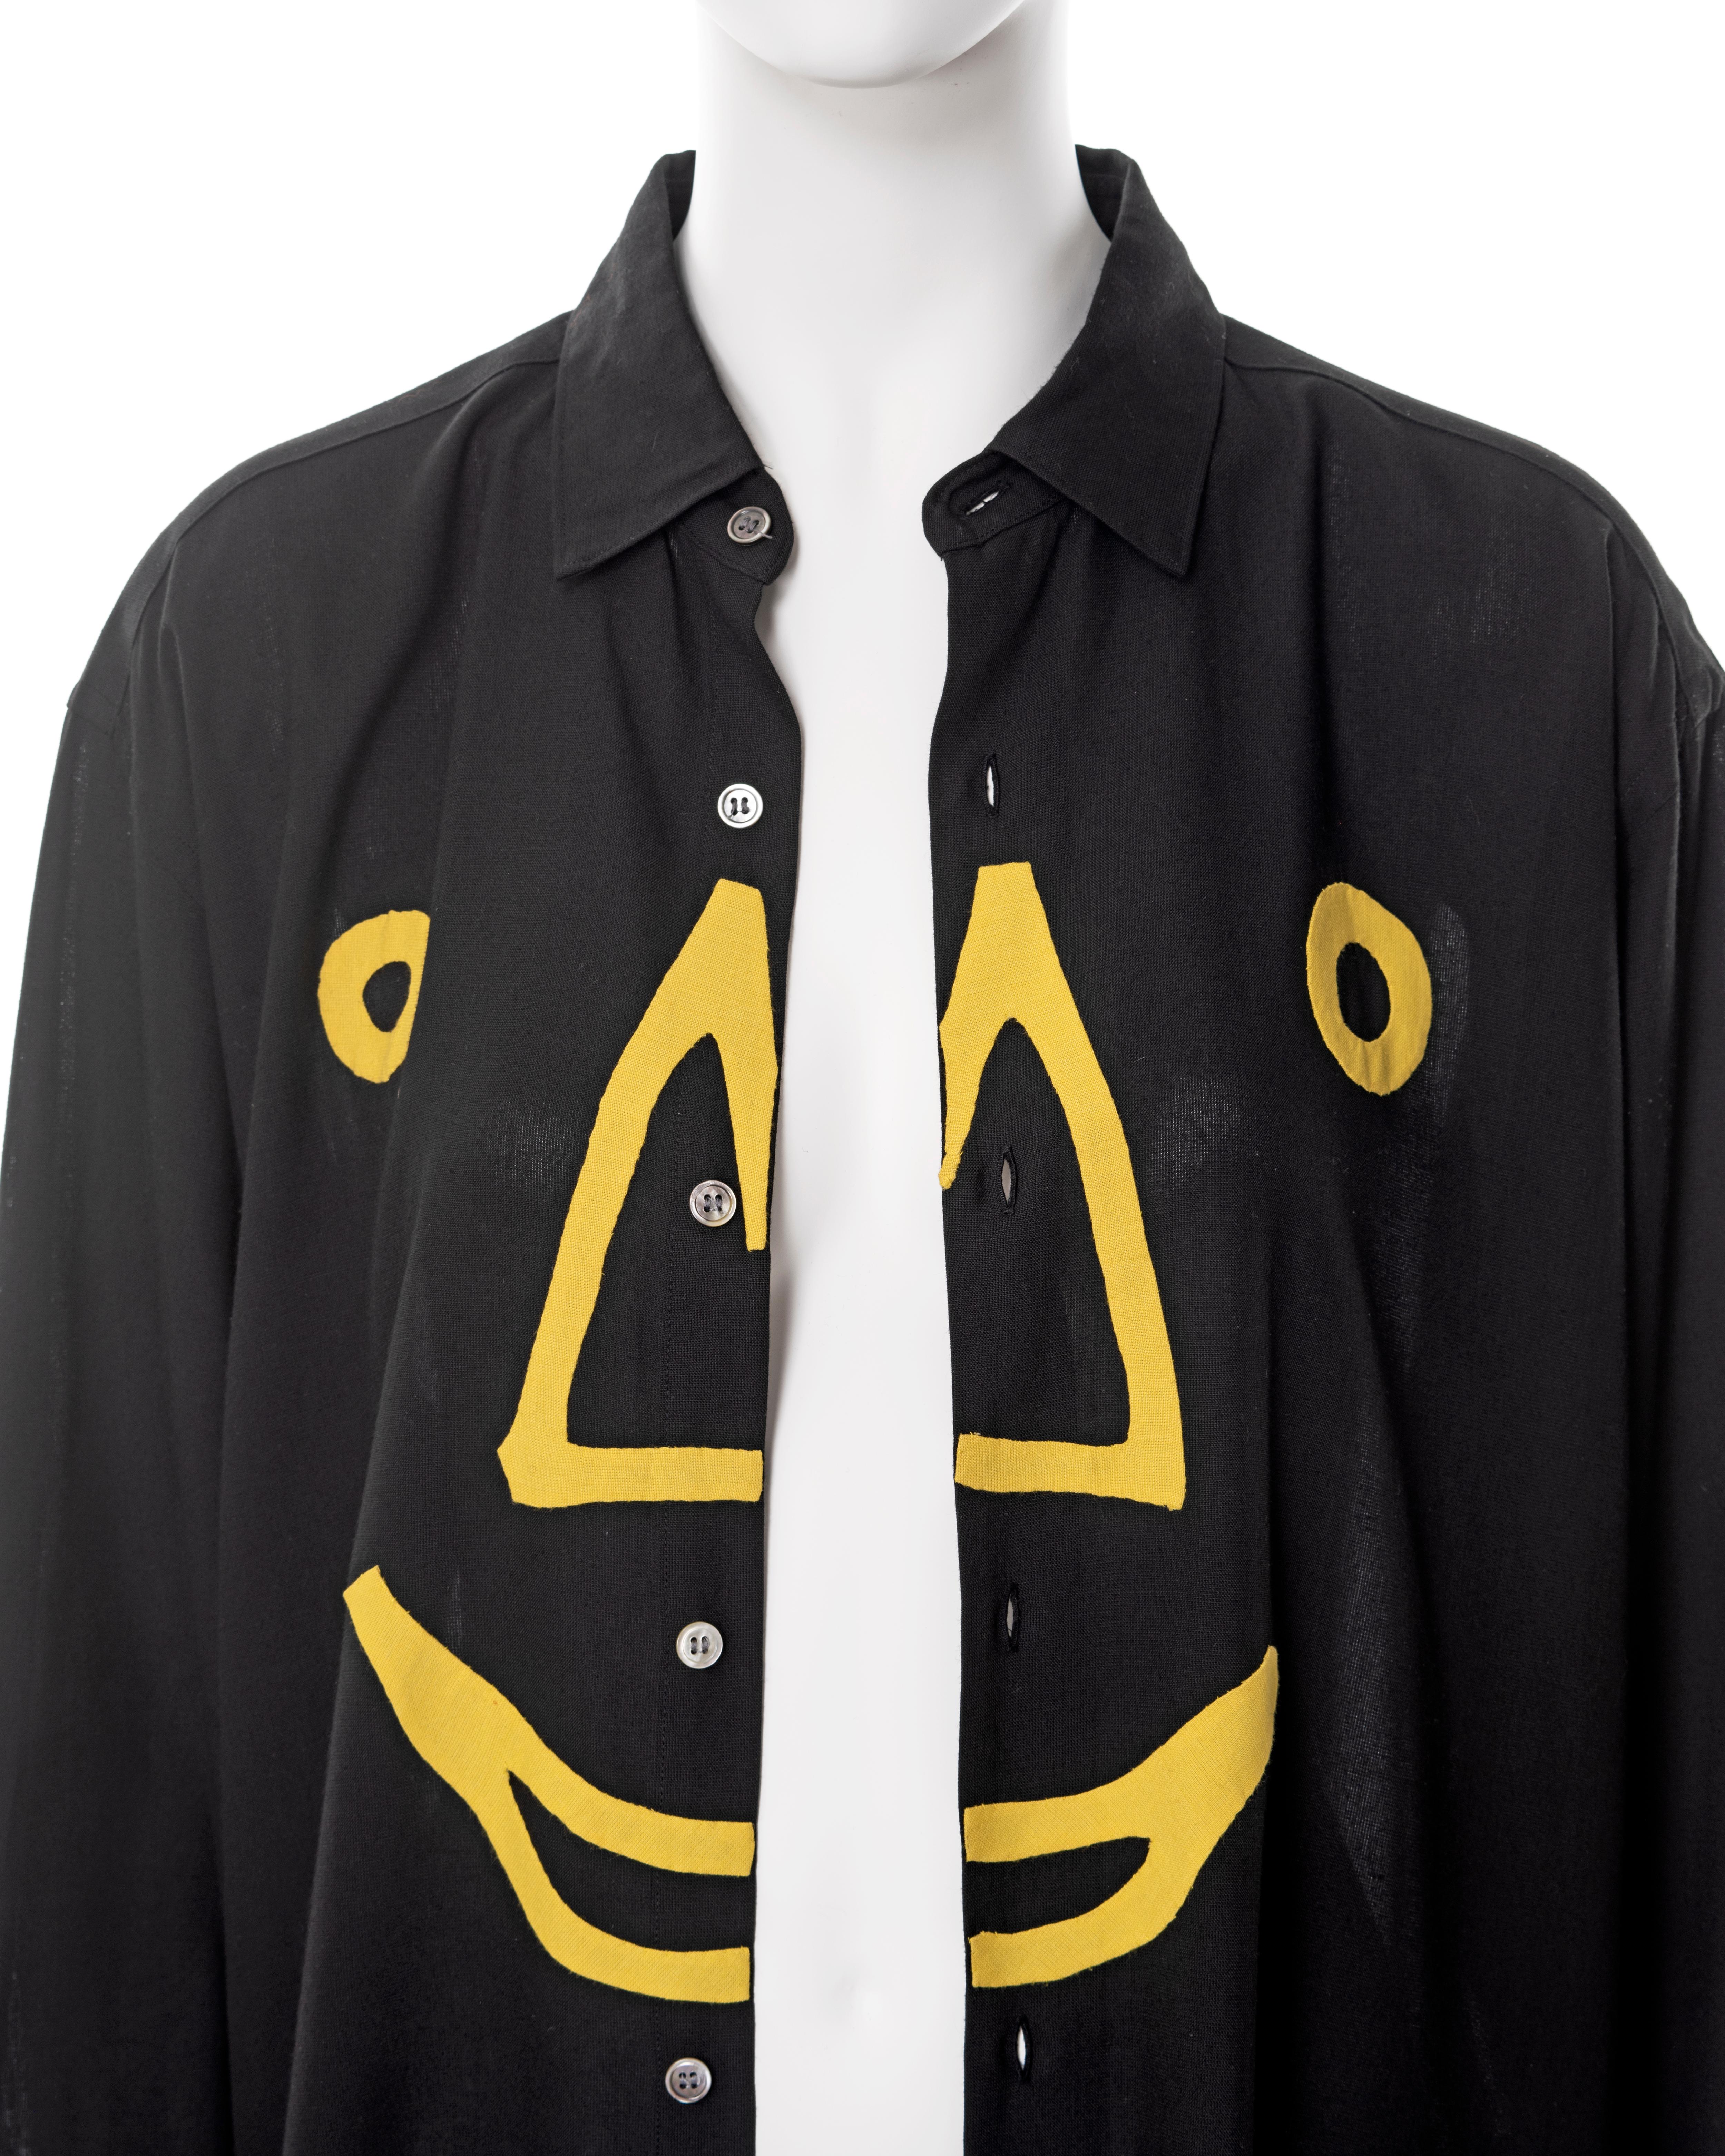 Yohji Yamamoto men's black rayon 'Smiley Face' shirt, fw 1991 For Sale 1